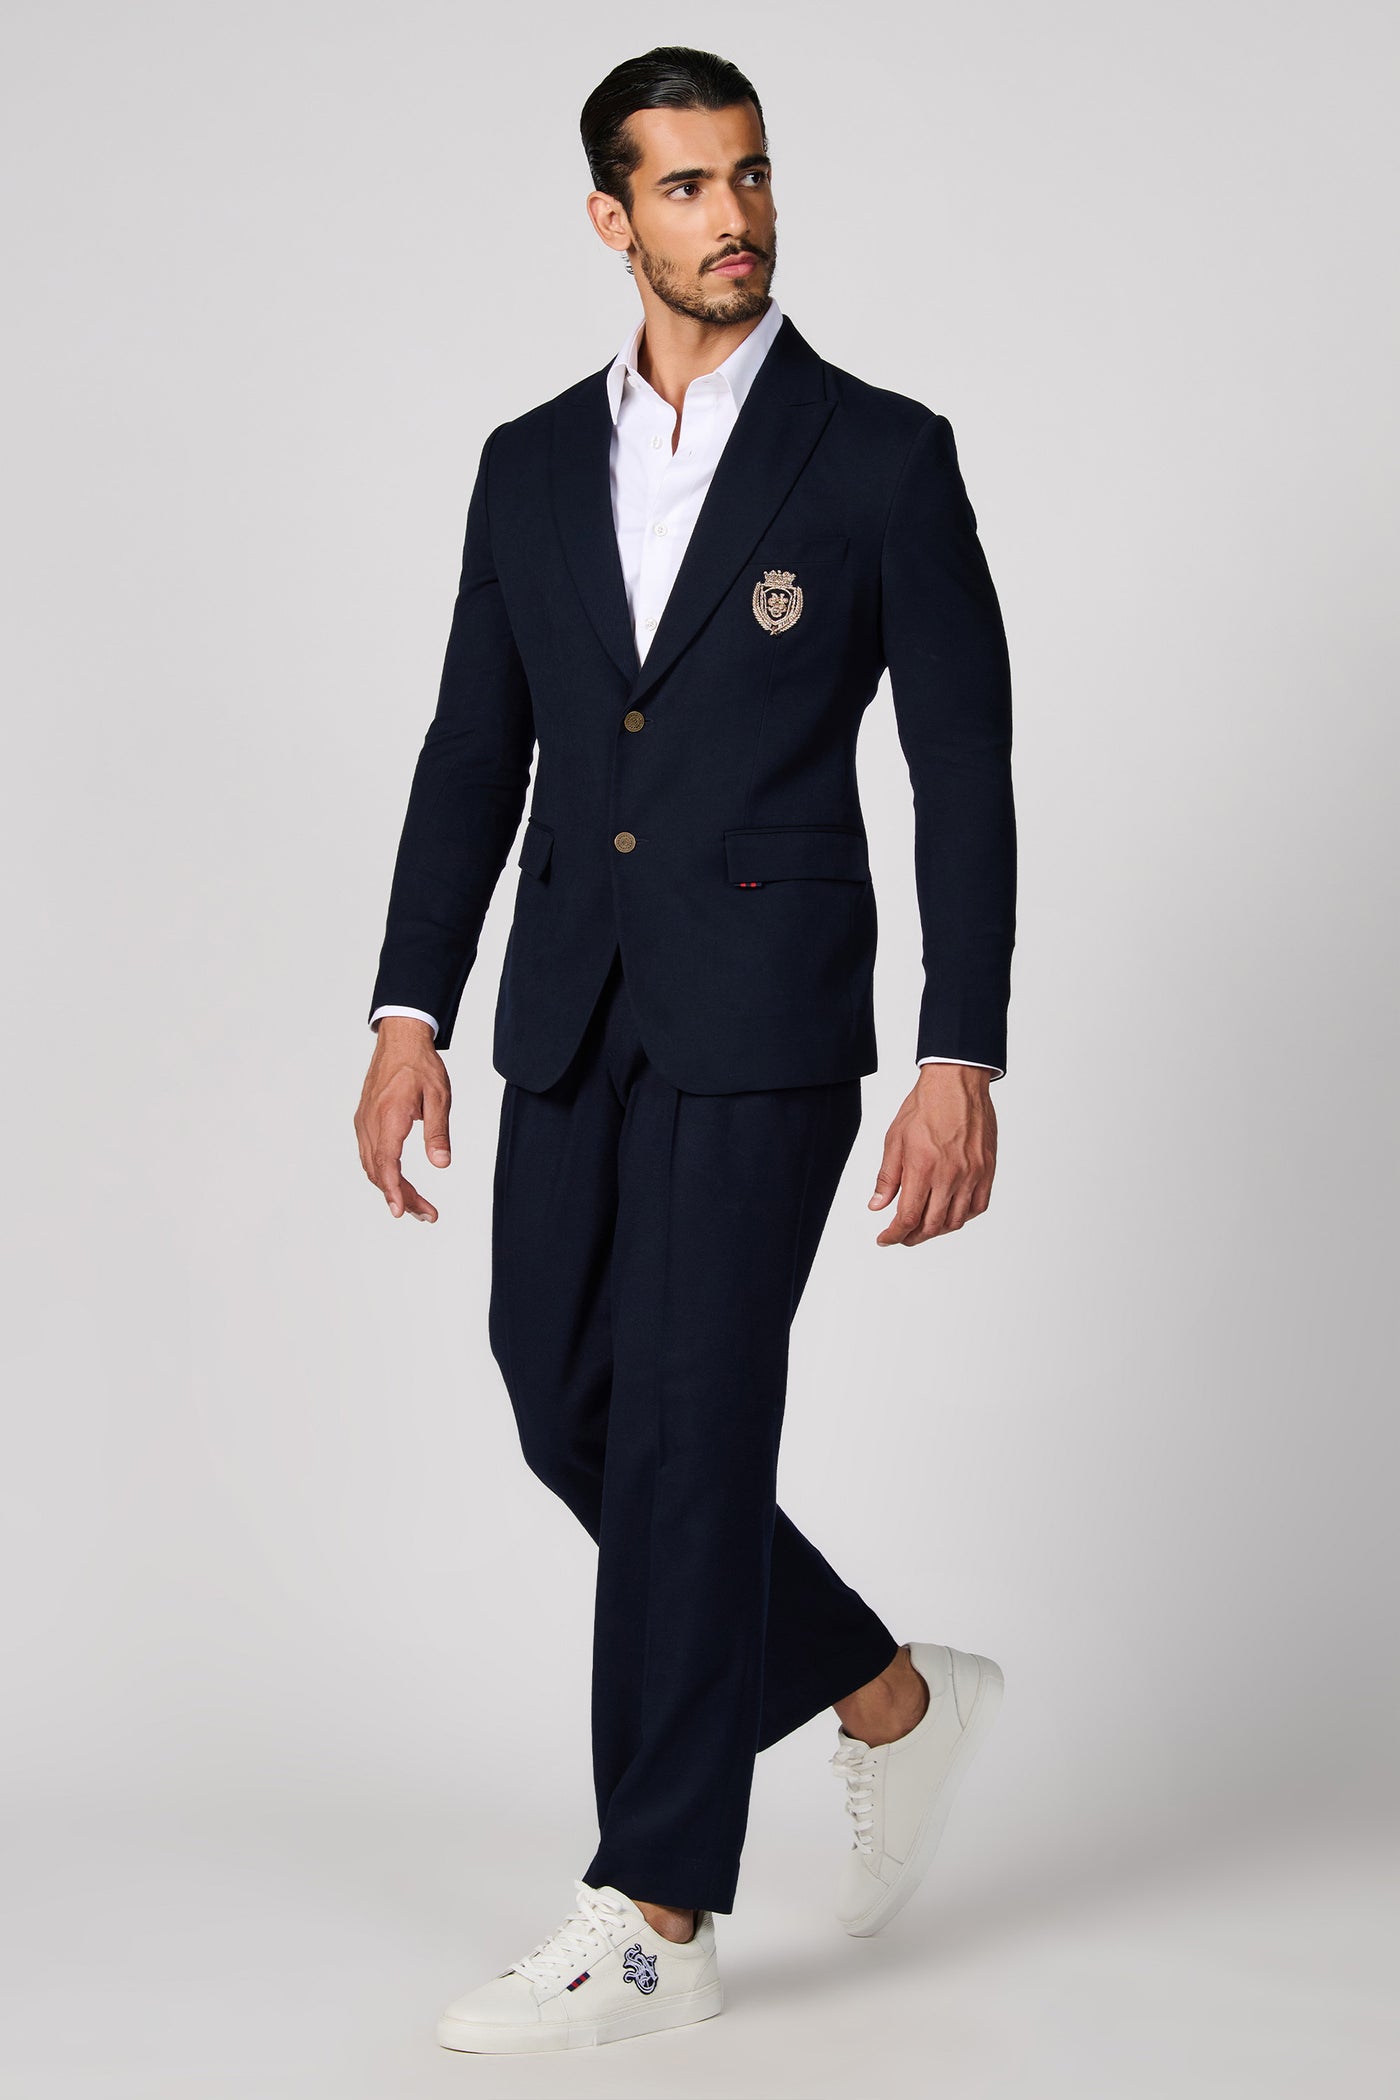 Shantanu & Nikhil Menswear SNCC Crested Gentlemen's Jacket indian designer wear online shopping melange singapore